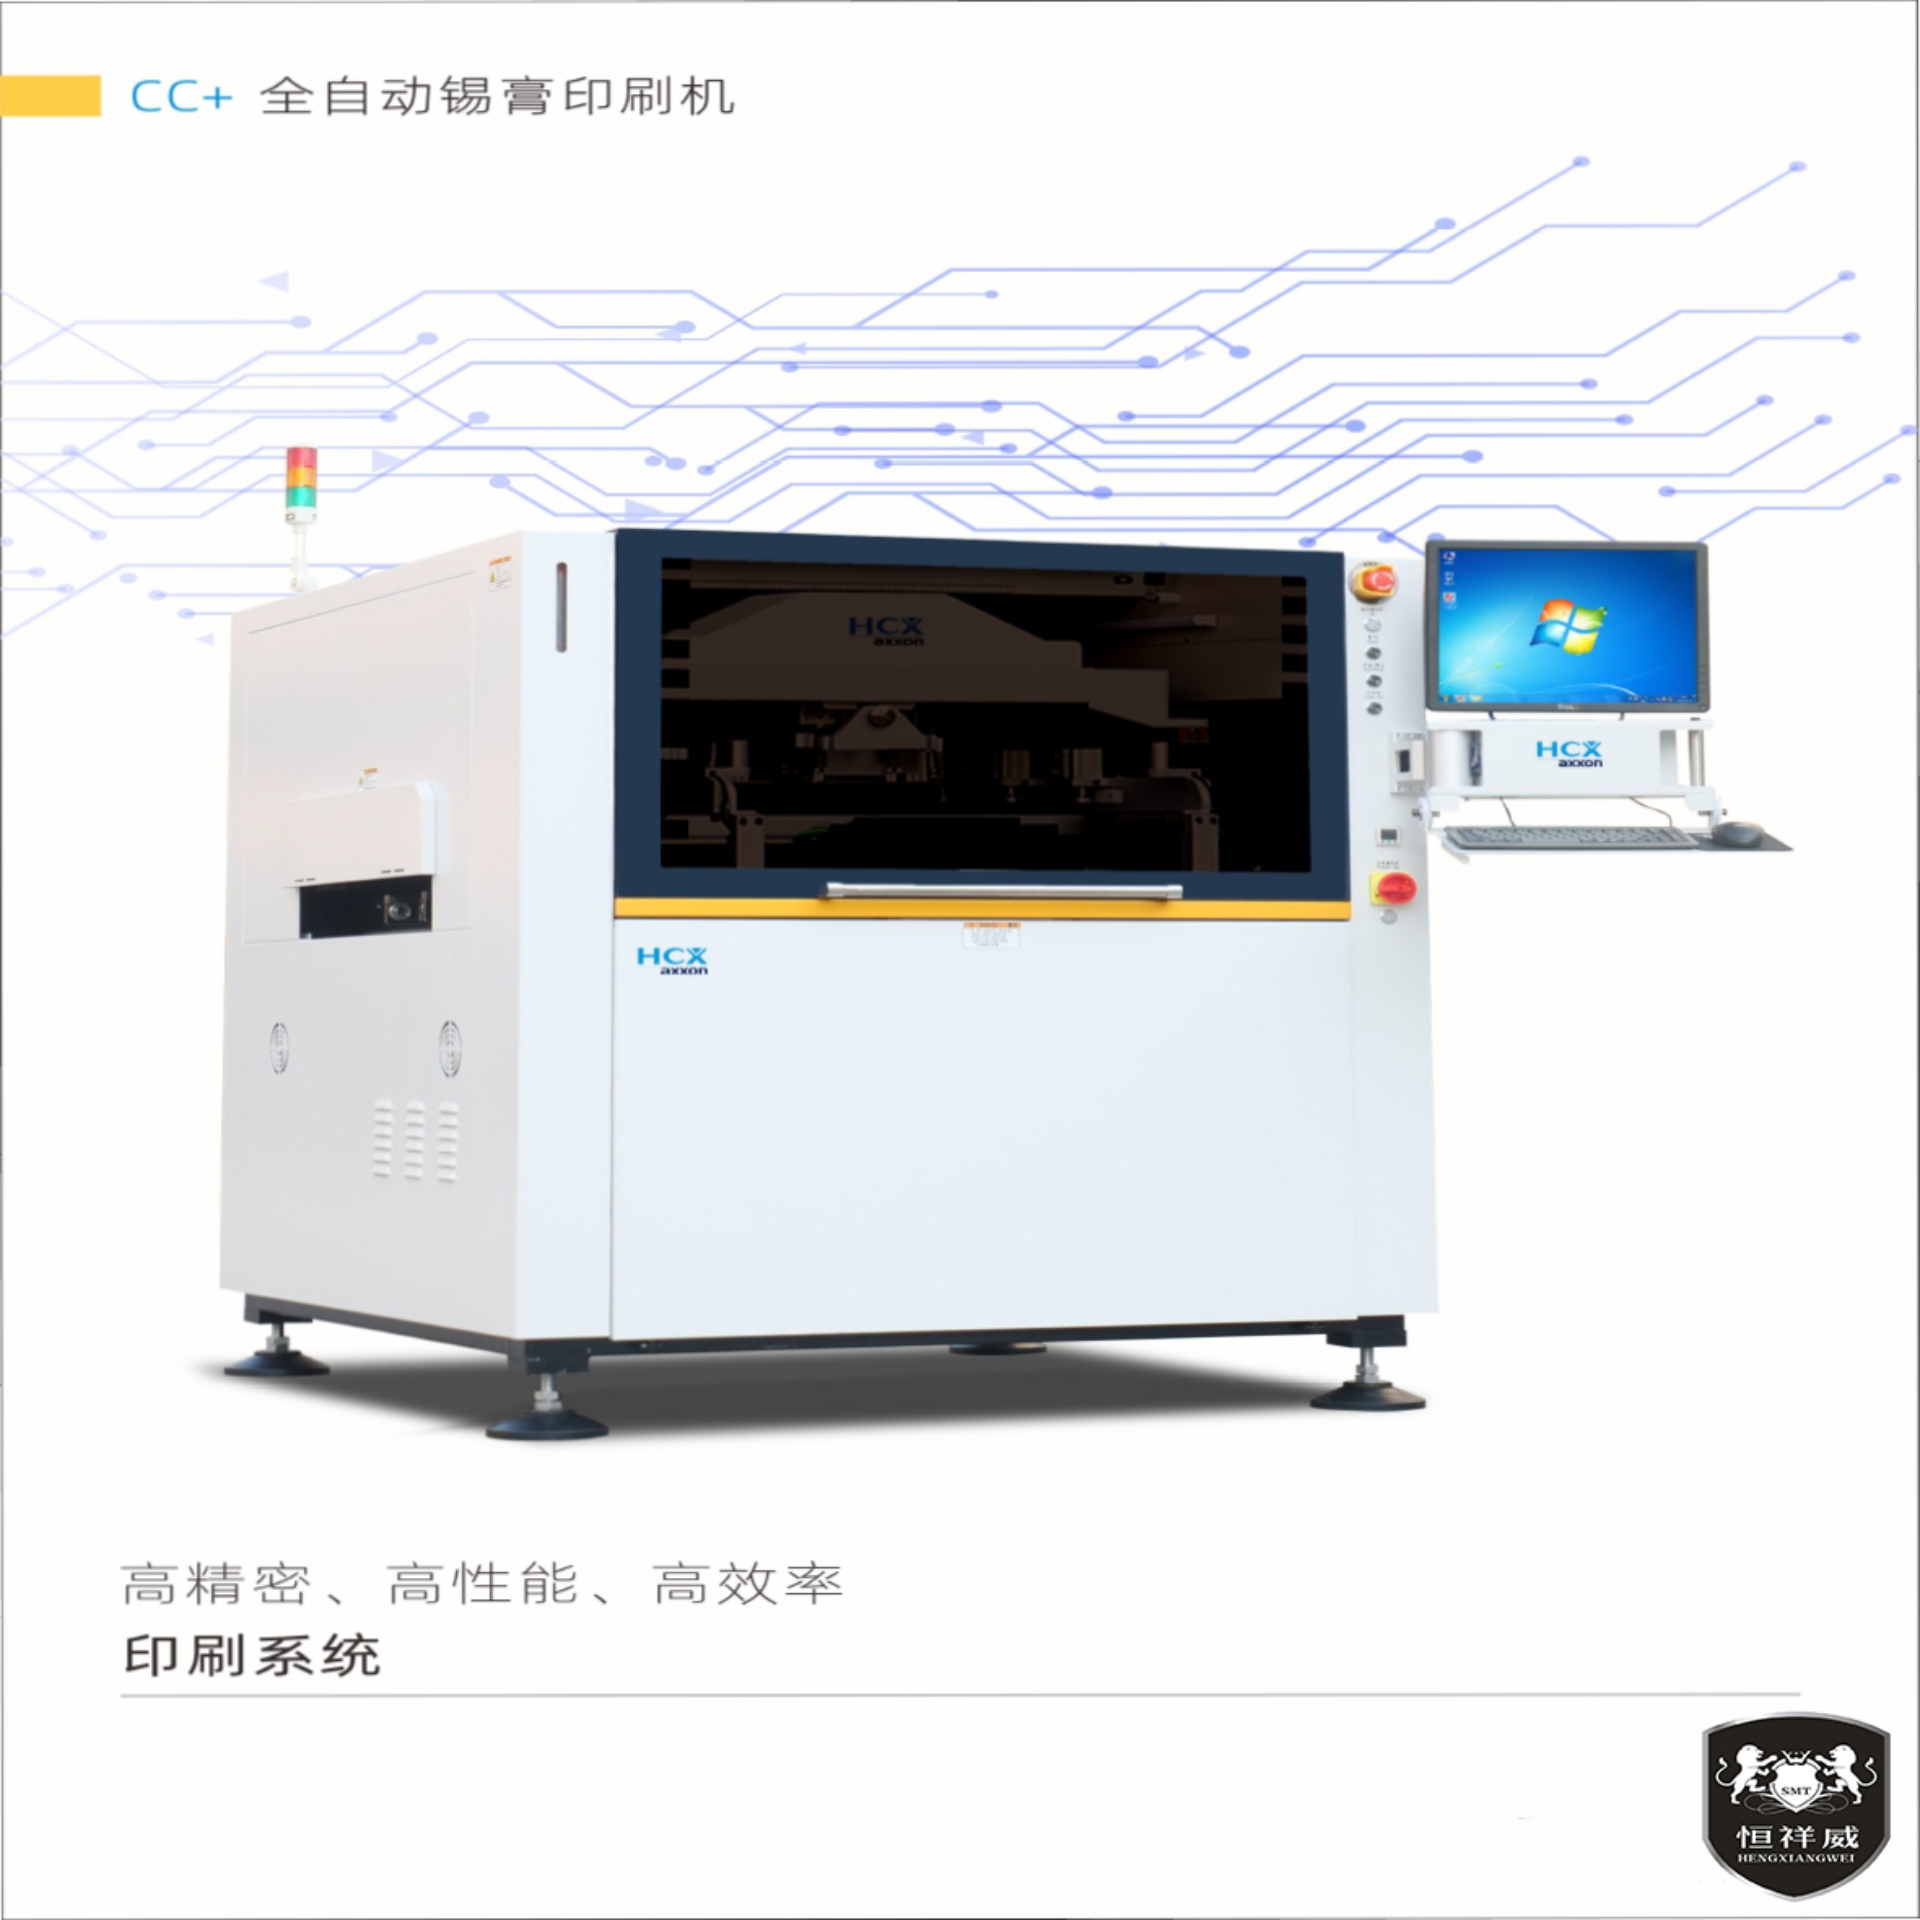 CC+系列全自动锡膏印刷机 高性能 高效率 高性价比